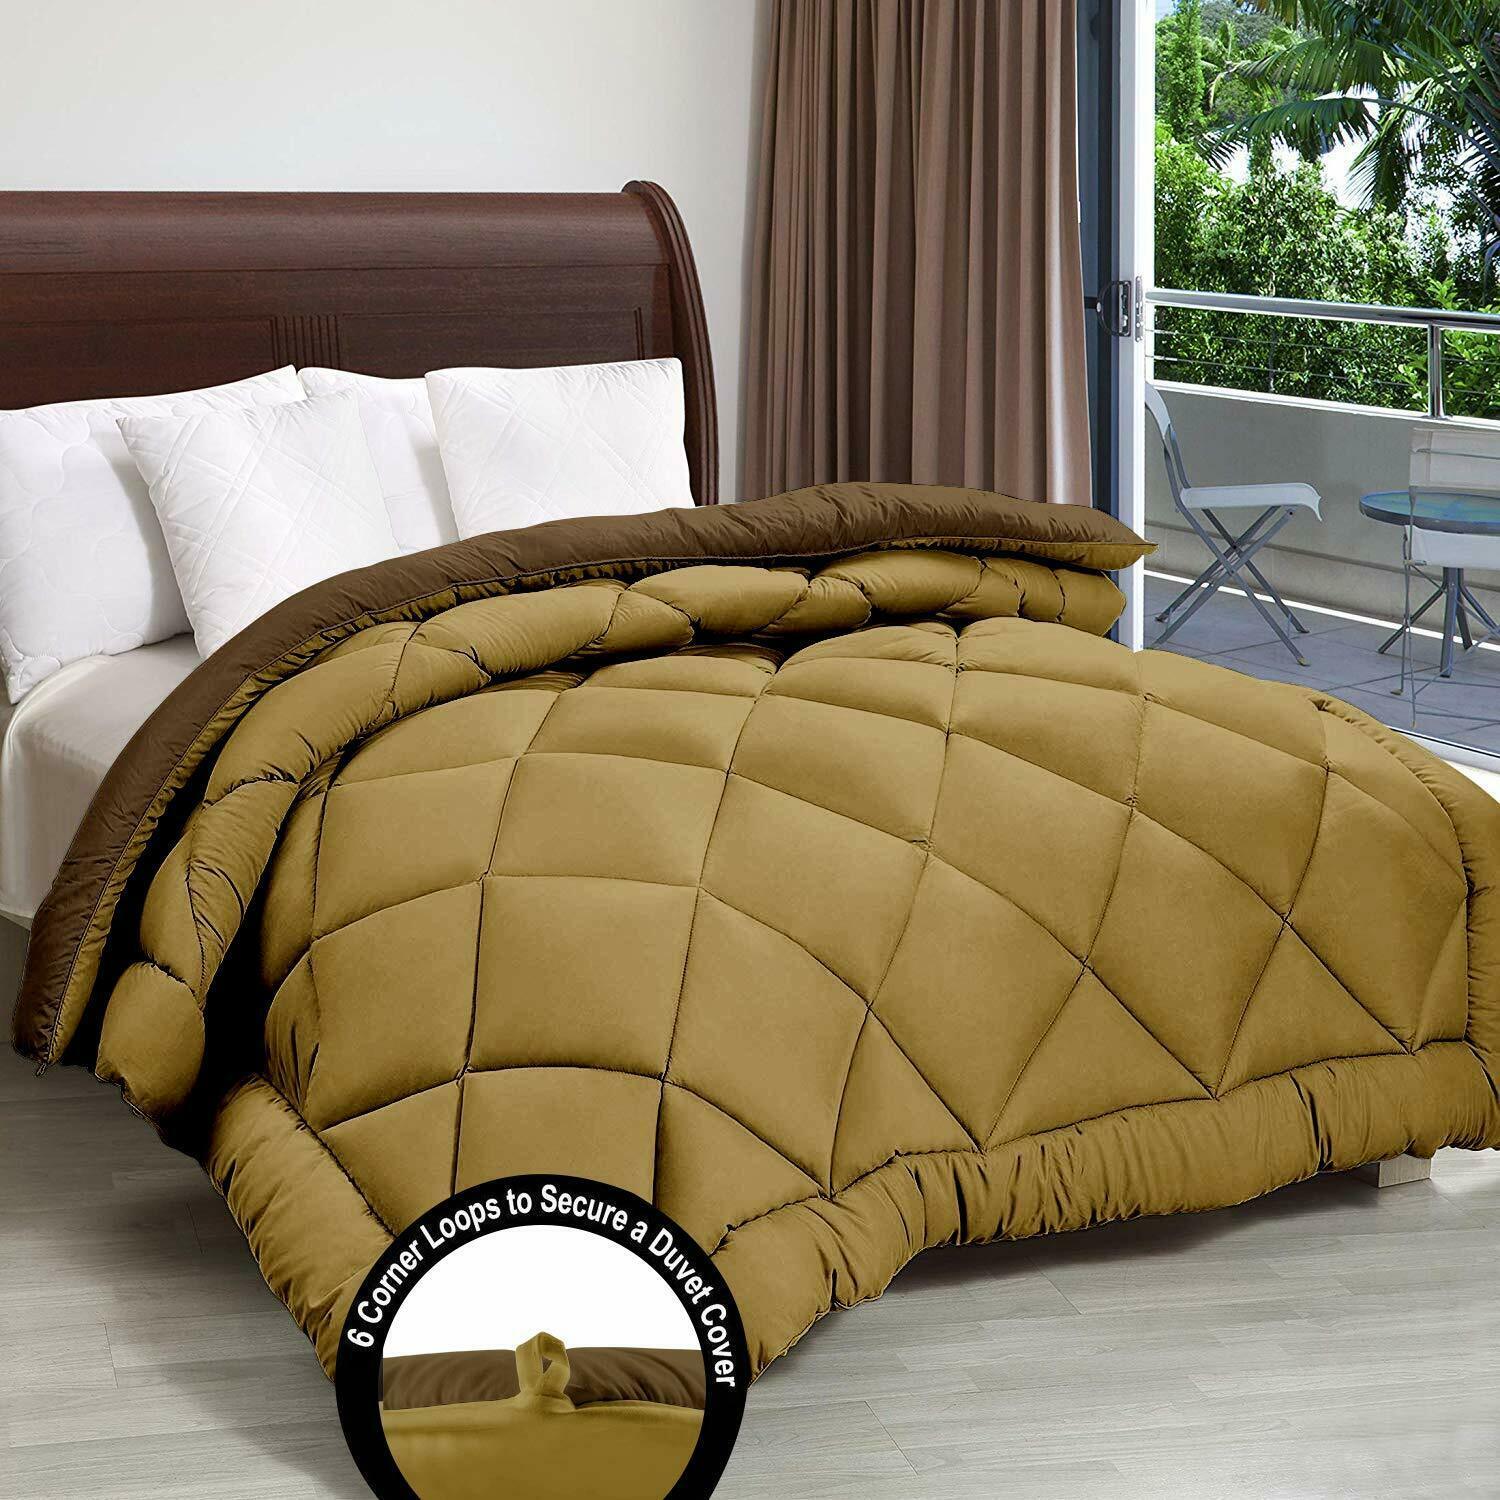 Double Bed Reversible Comforters, Fabric Cotton 300 GSM, Walnut & Dark Brown